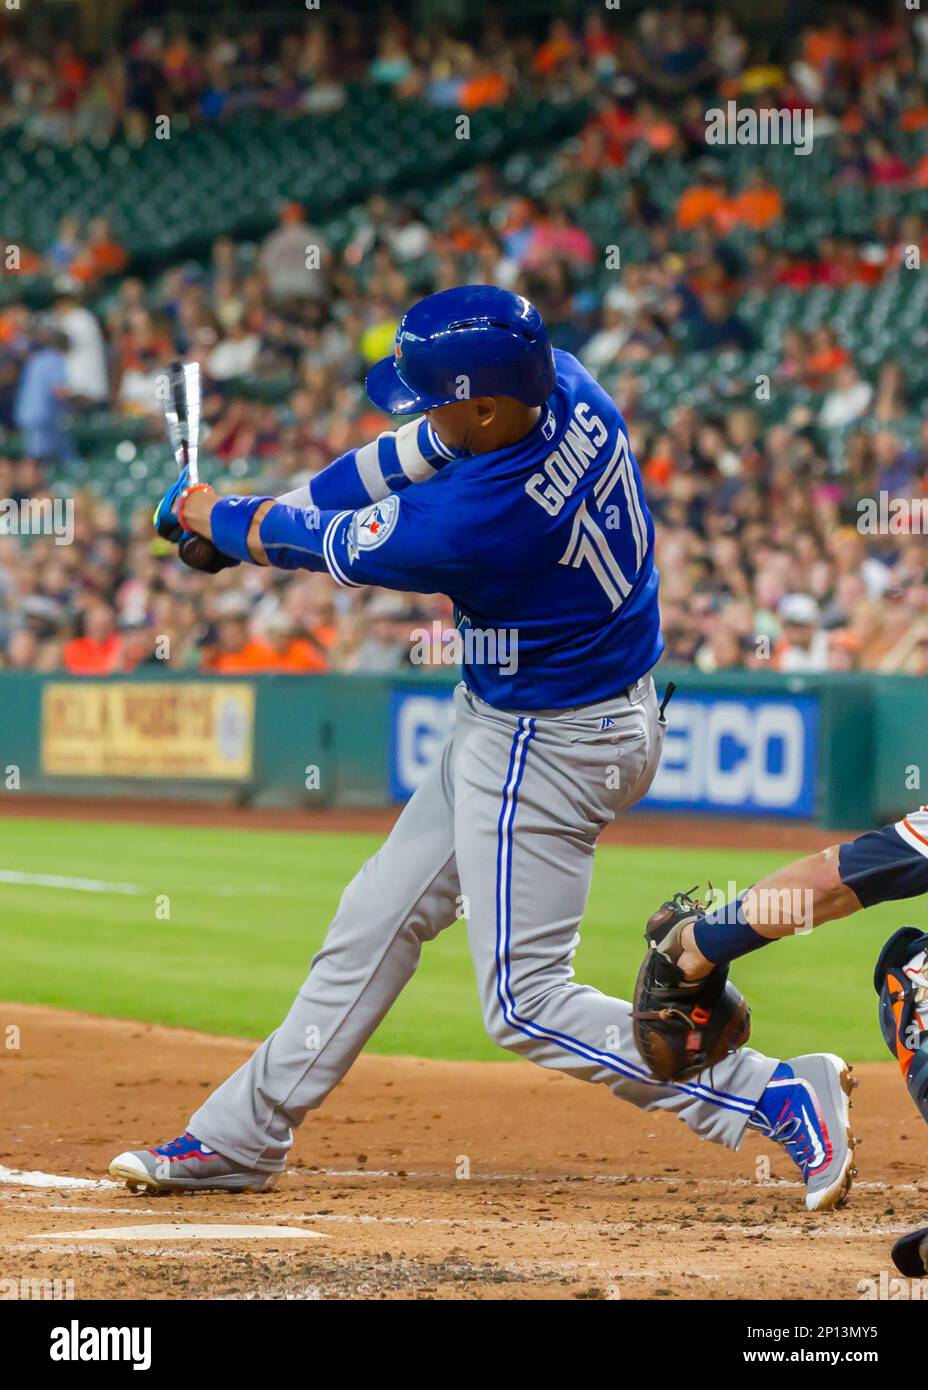 01 August 2016: Toronto Blue Jays second baseman Ryan Goins (17